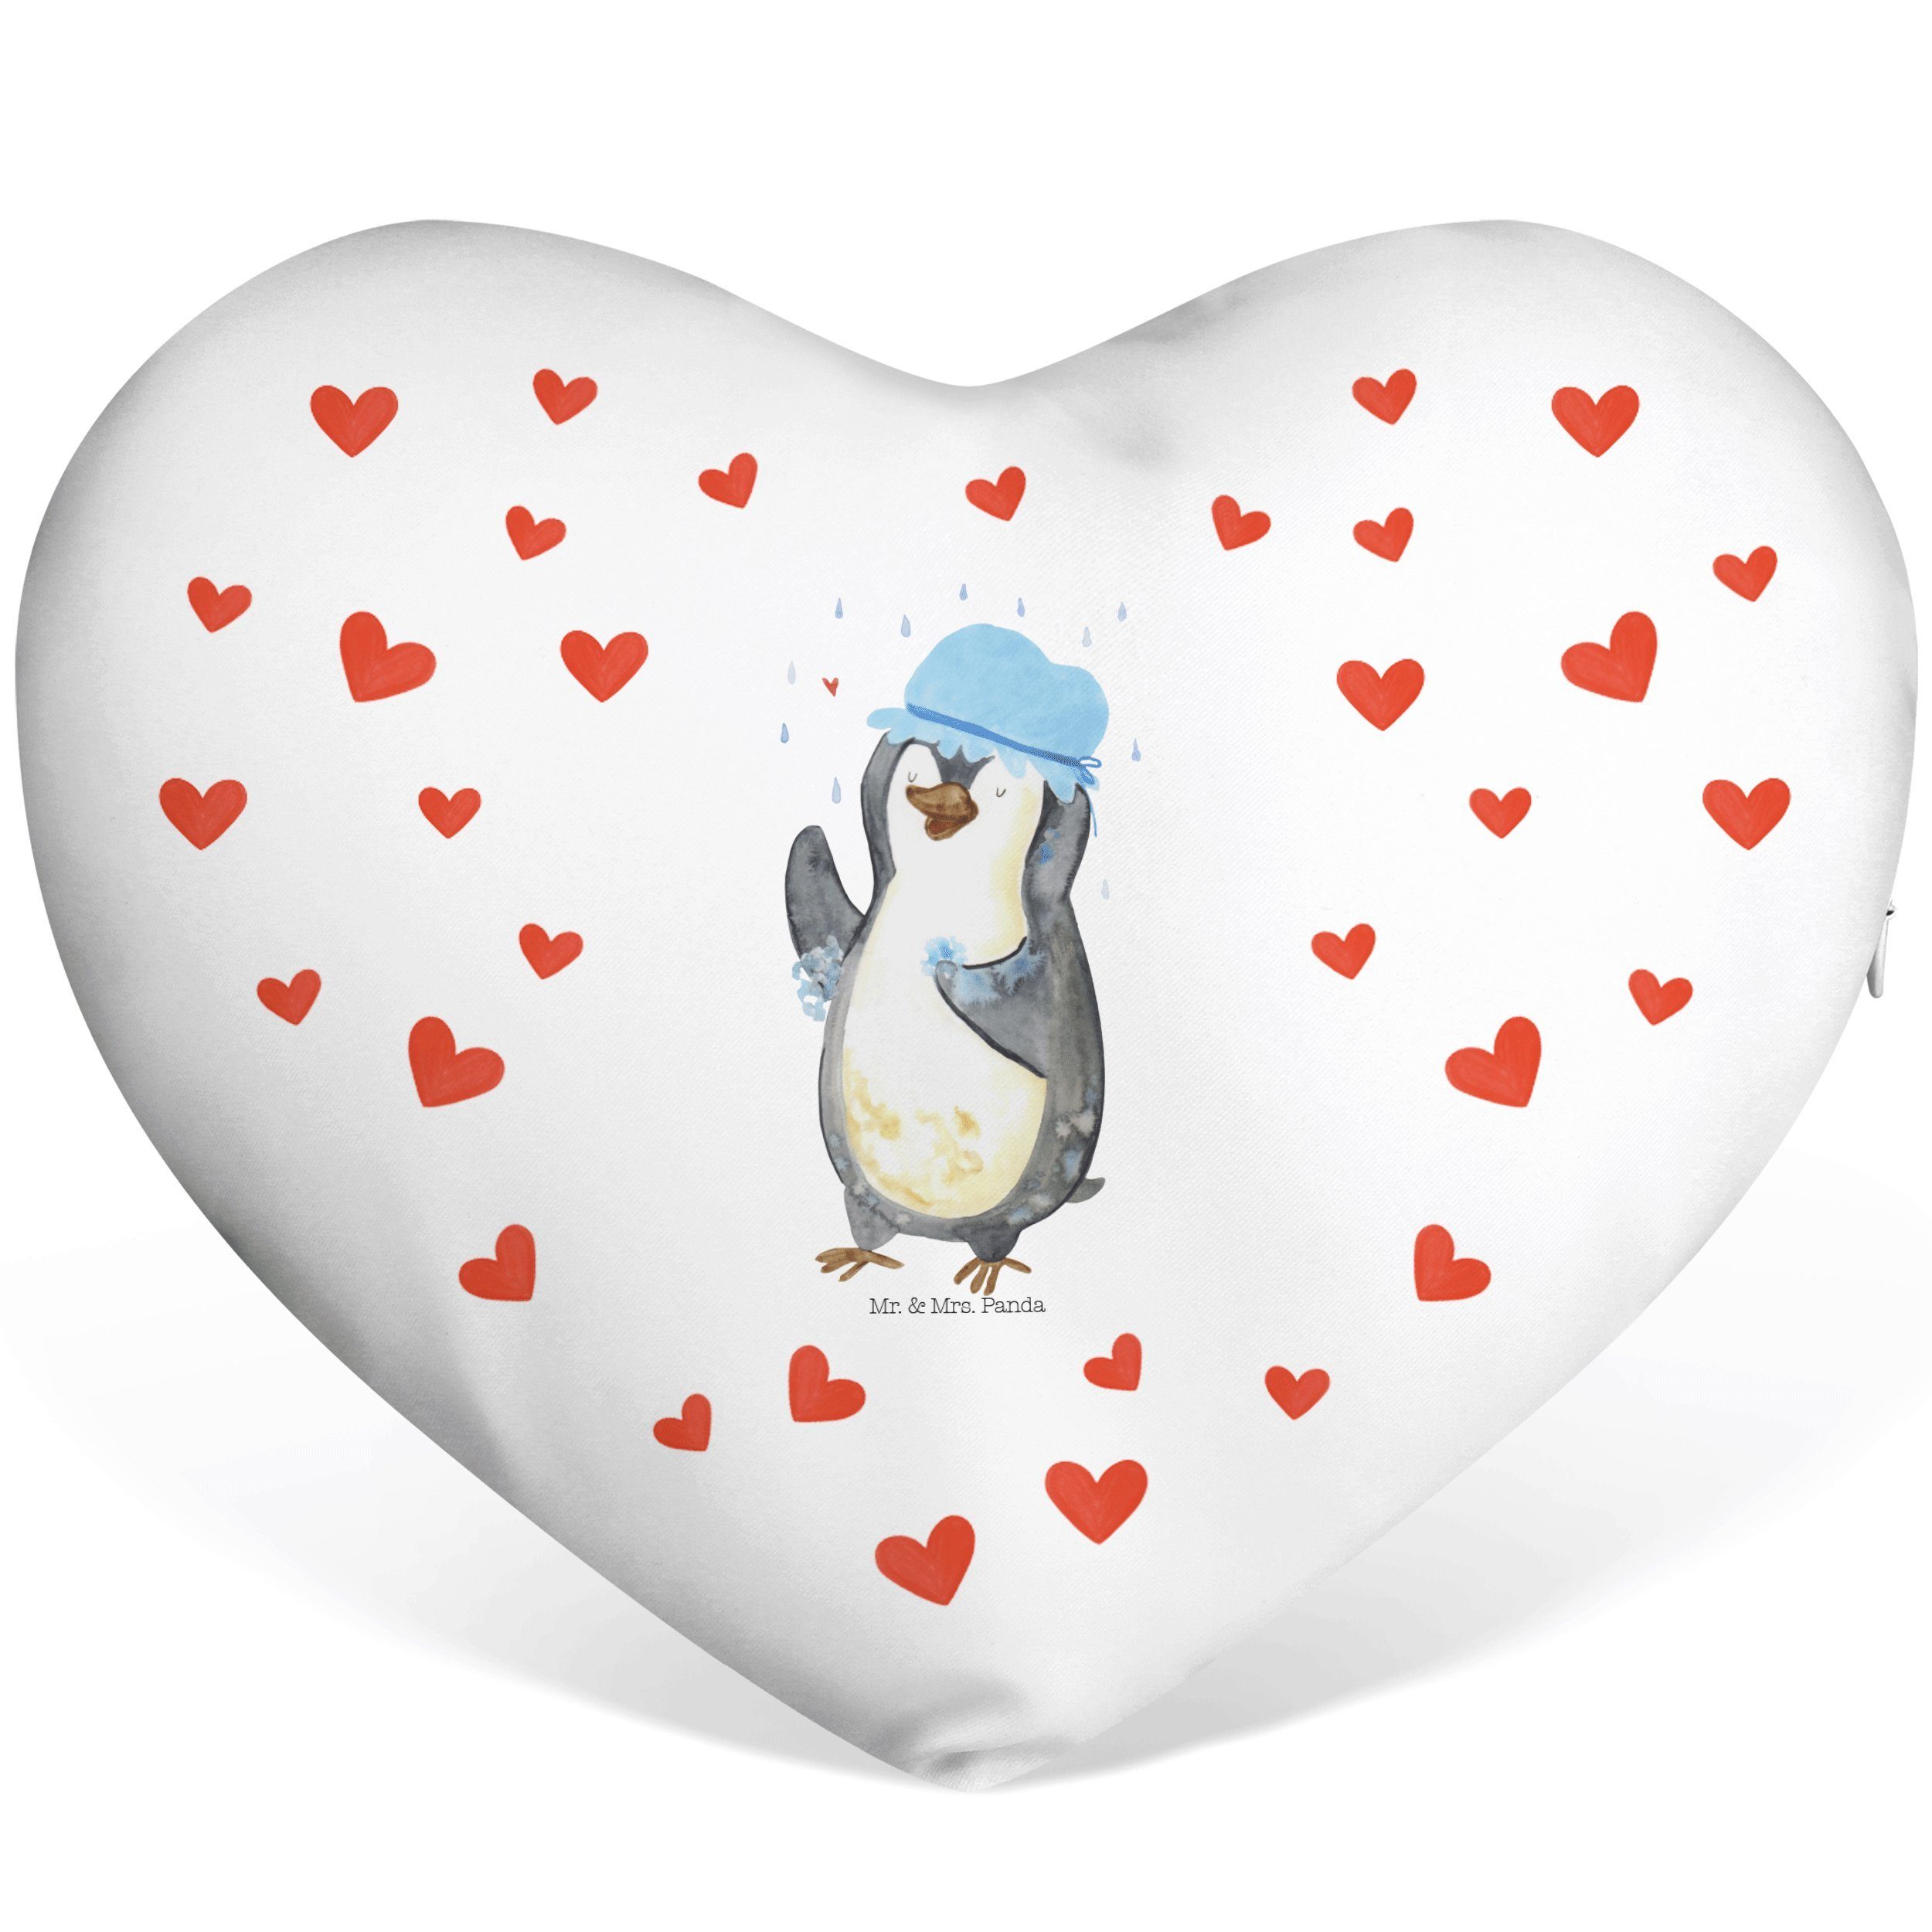 Mr. & Mrs. Panda Dekokissen Pinguin duscht - Weiß - Geschenk, Dekokissen, Herzform, Lebensmotto